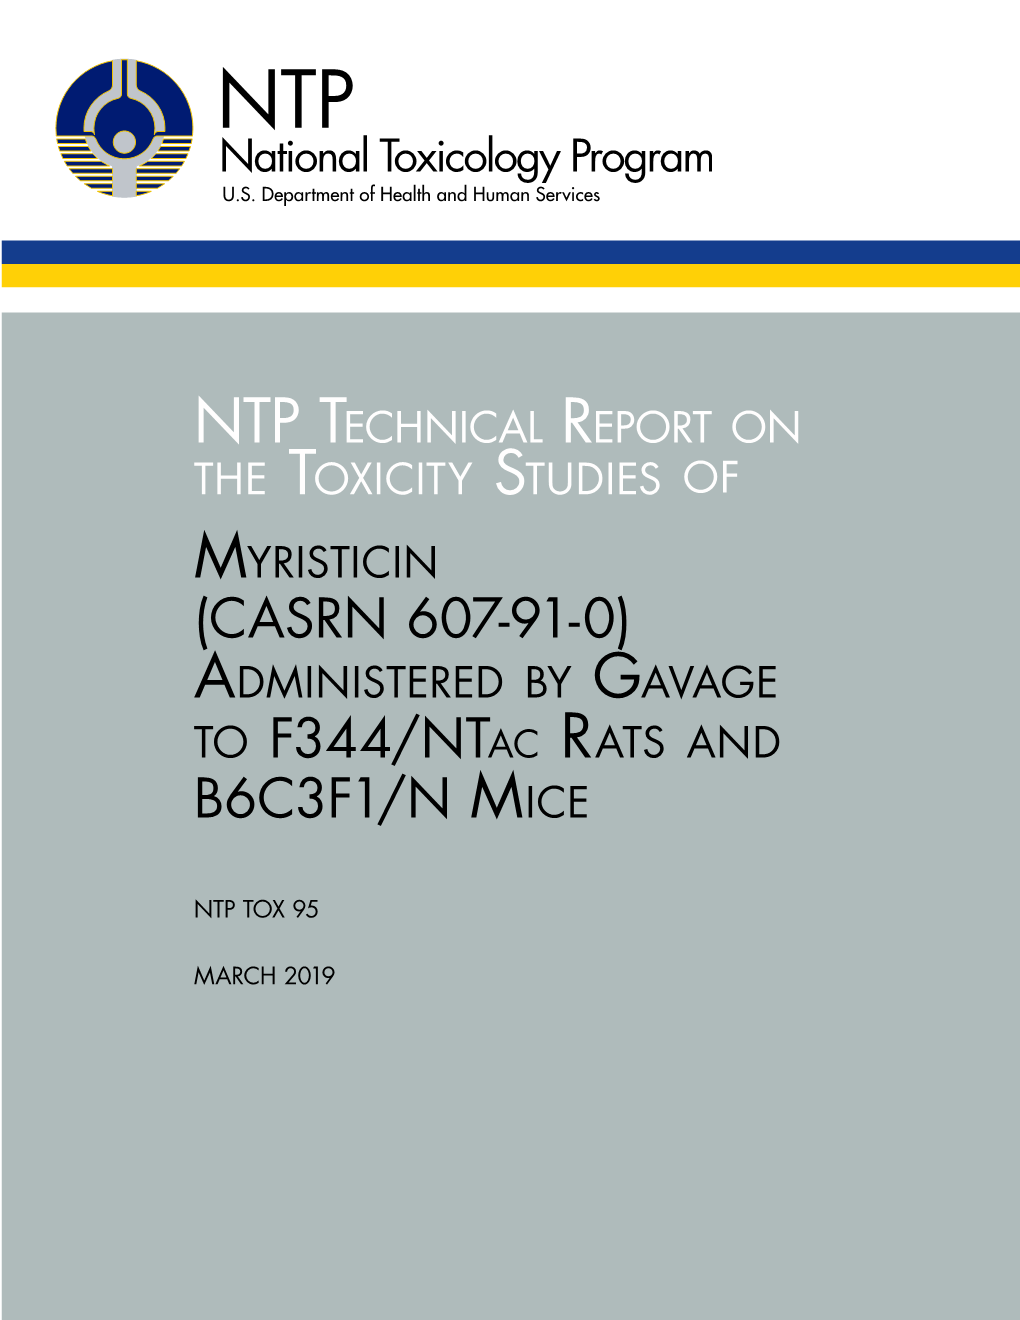 TOX-95: Toxicity Studies of Myristicin